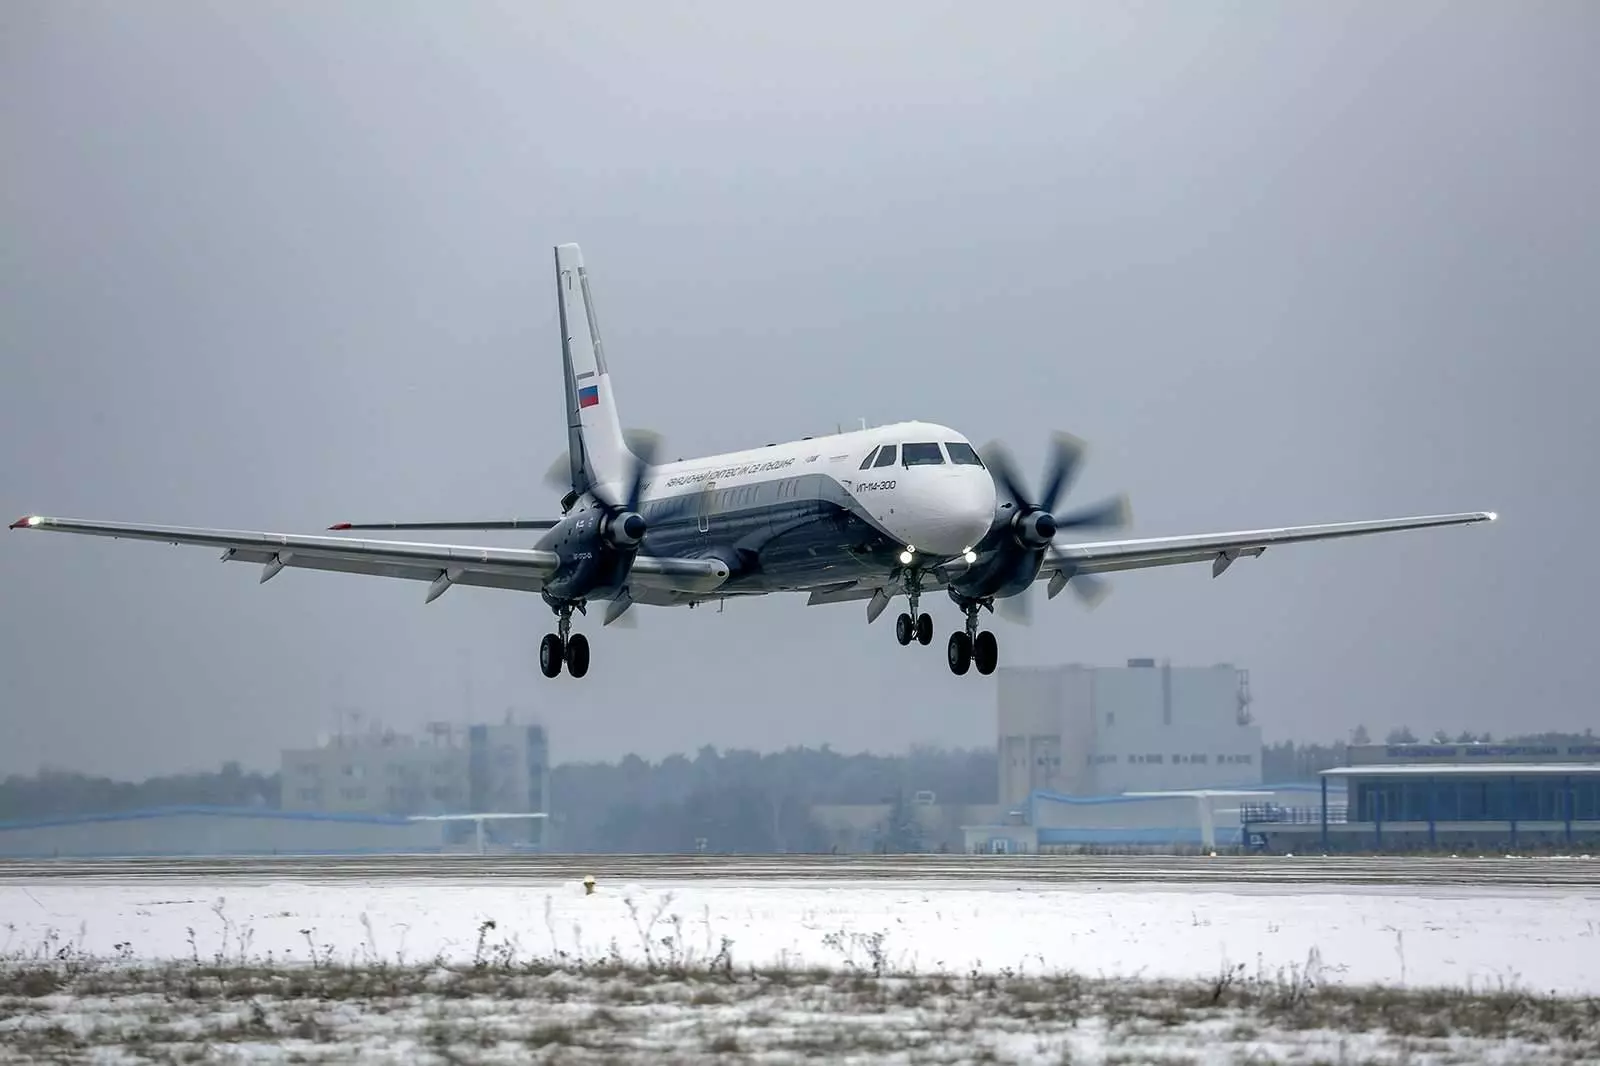 Самолет ил-114 300: технические характеристики, последние модификации